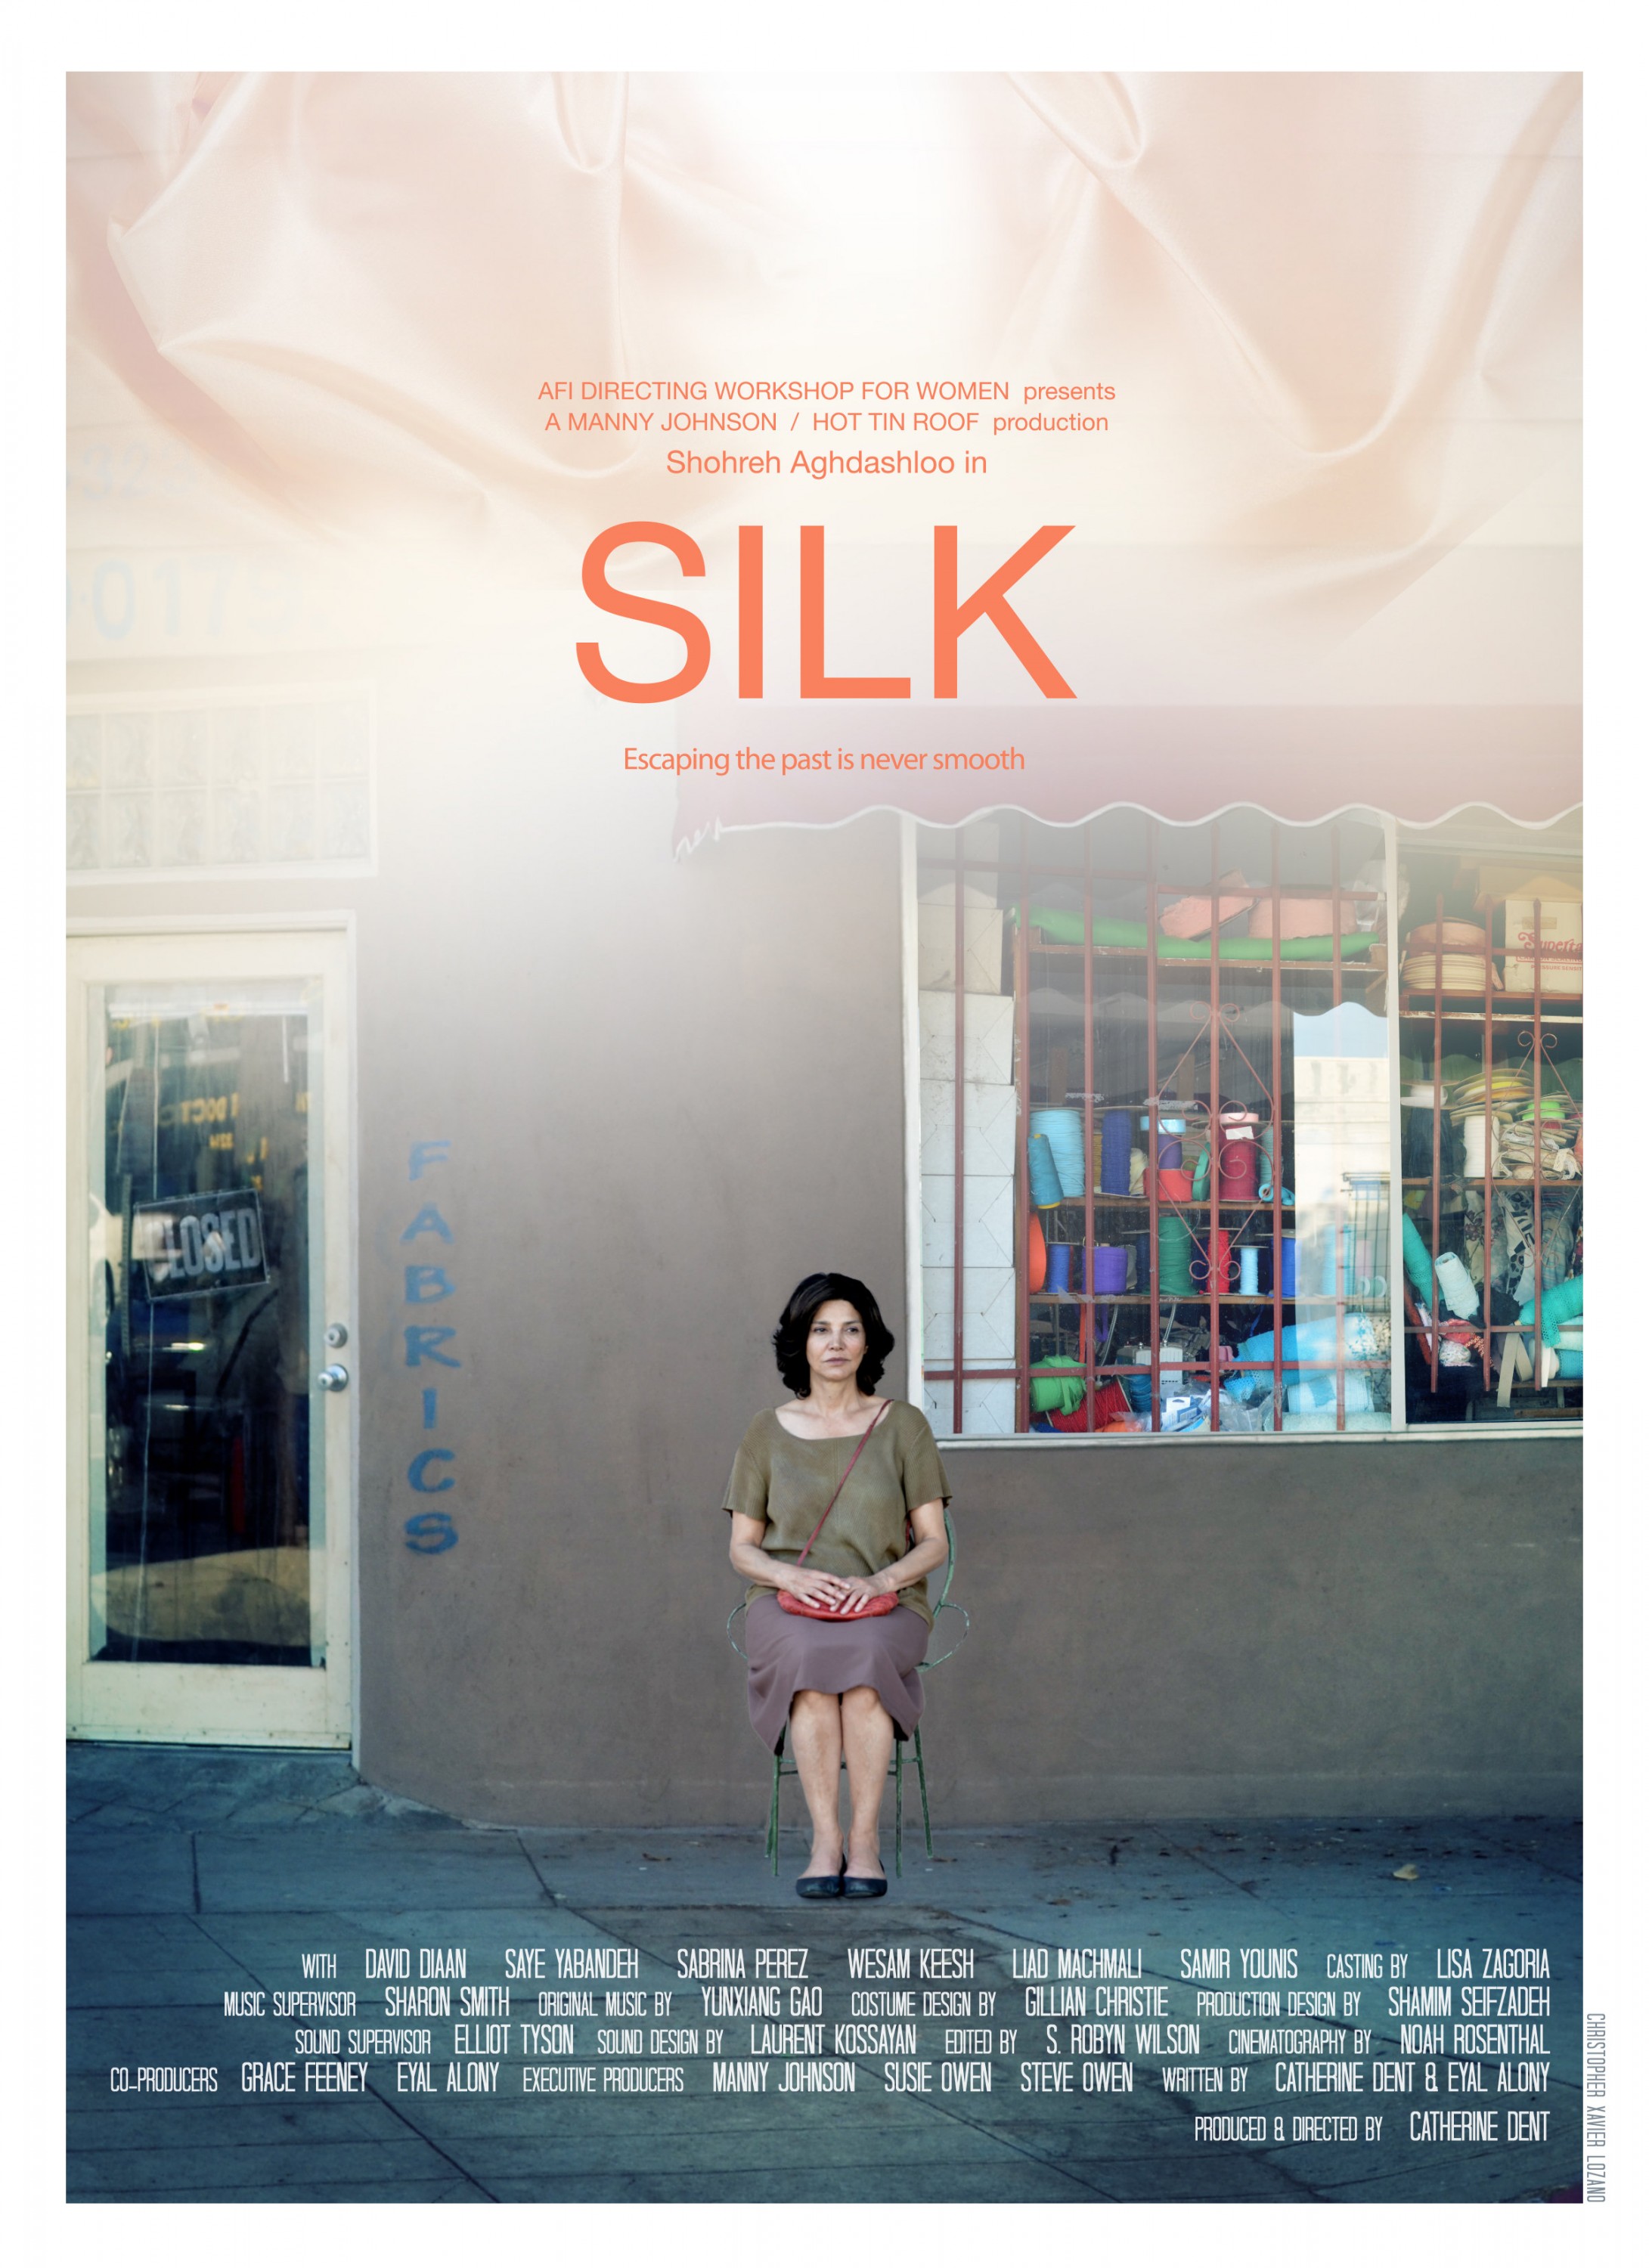 Mega Sized Movie Poster Image for Silk